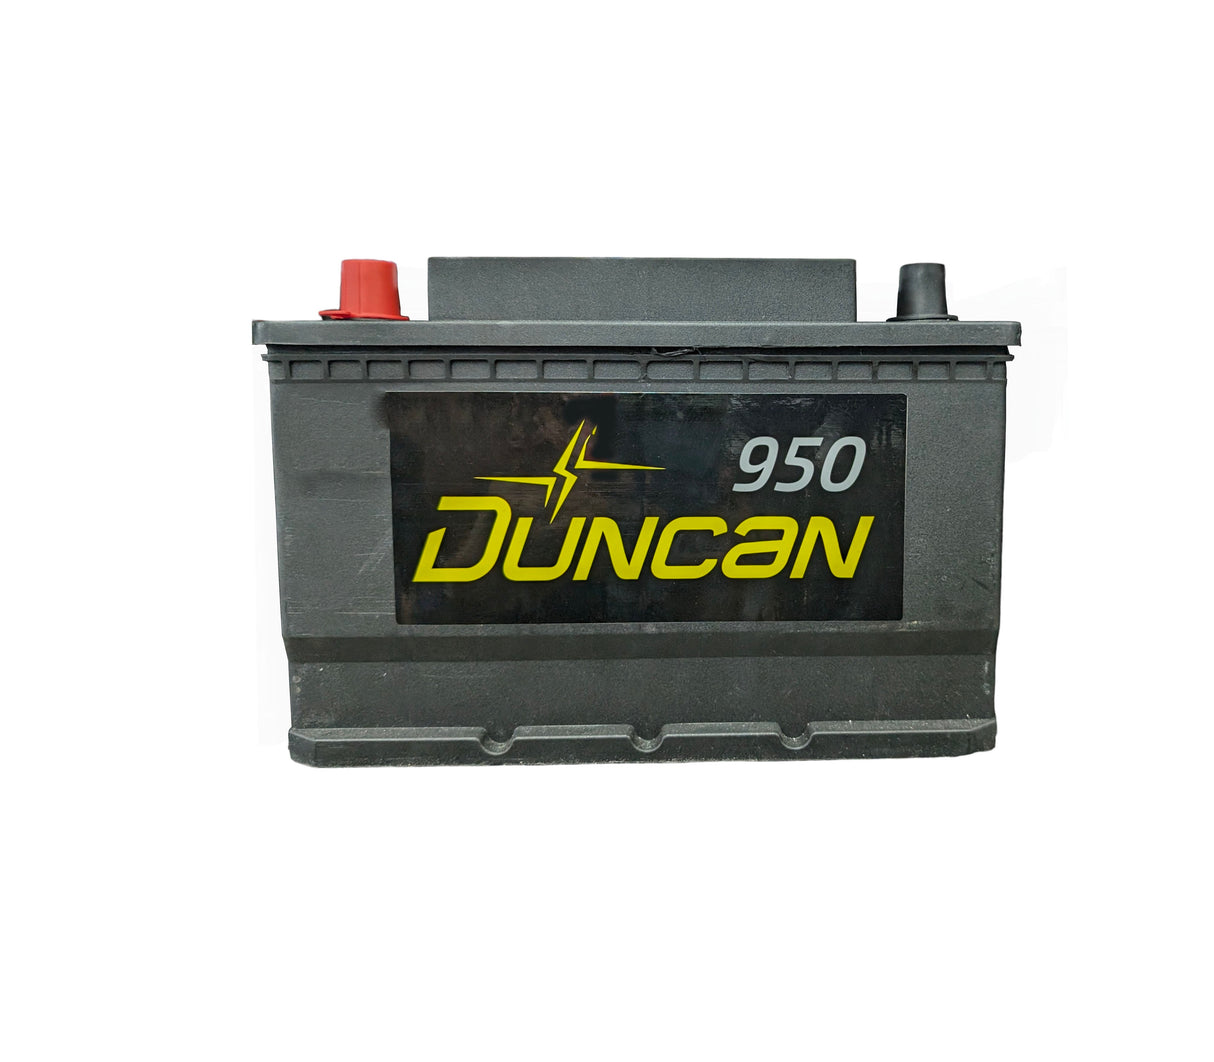 Bateria de vehículo D43-950 Duncan